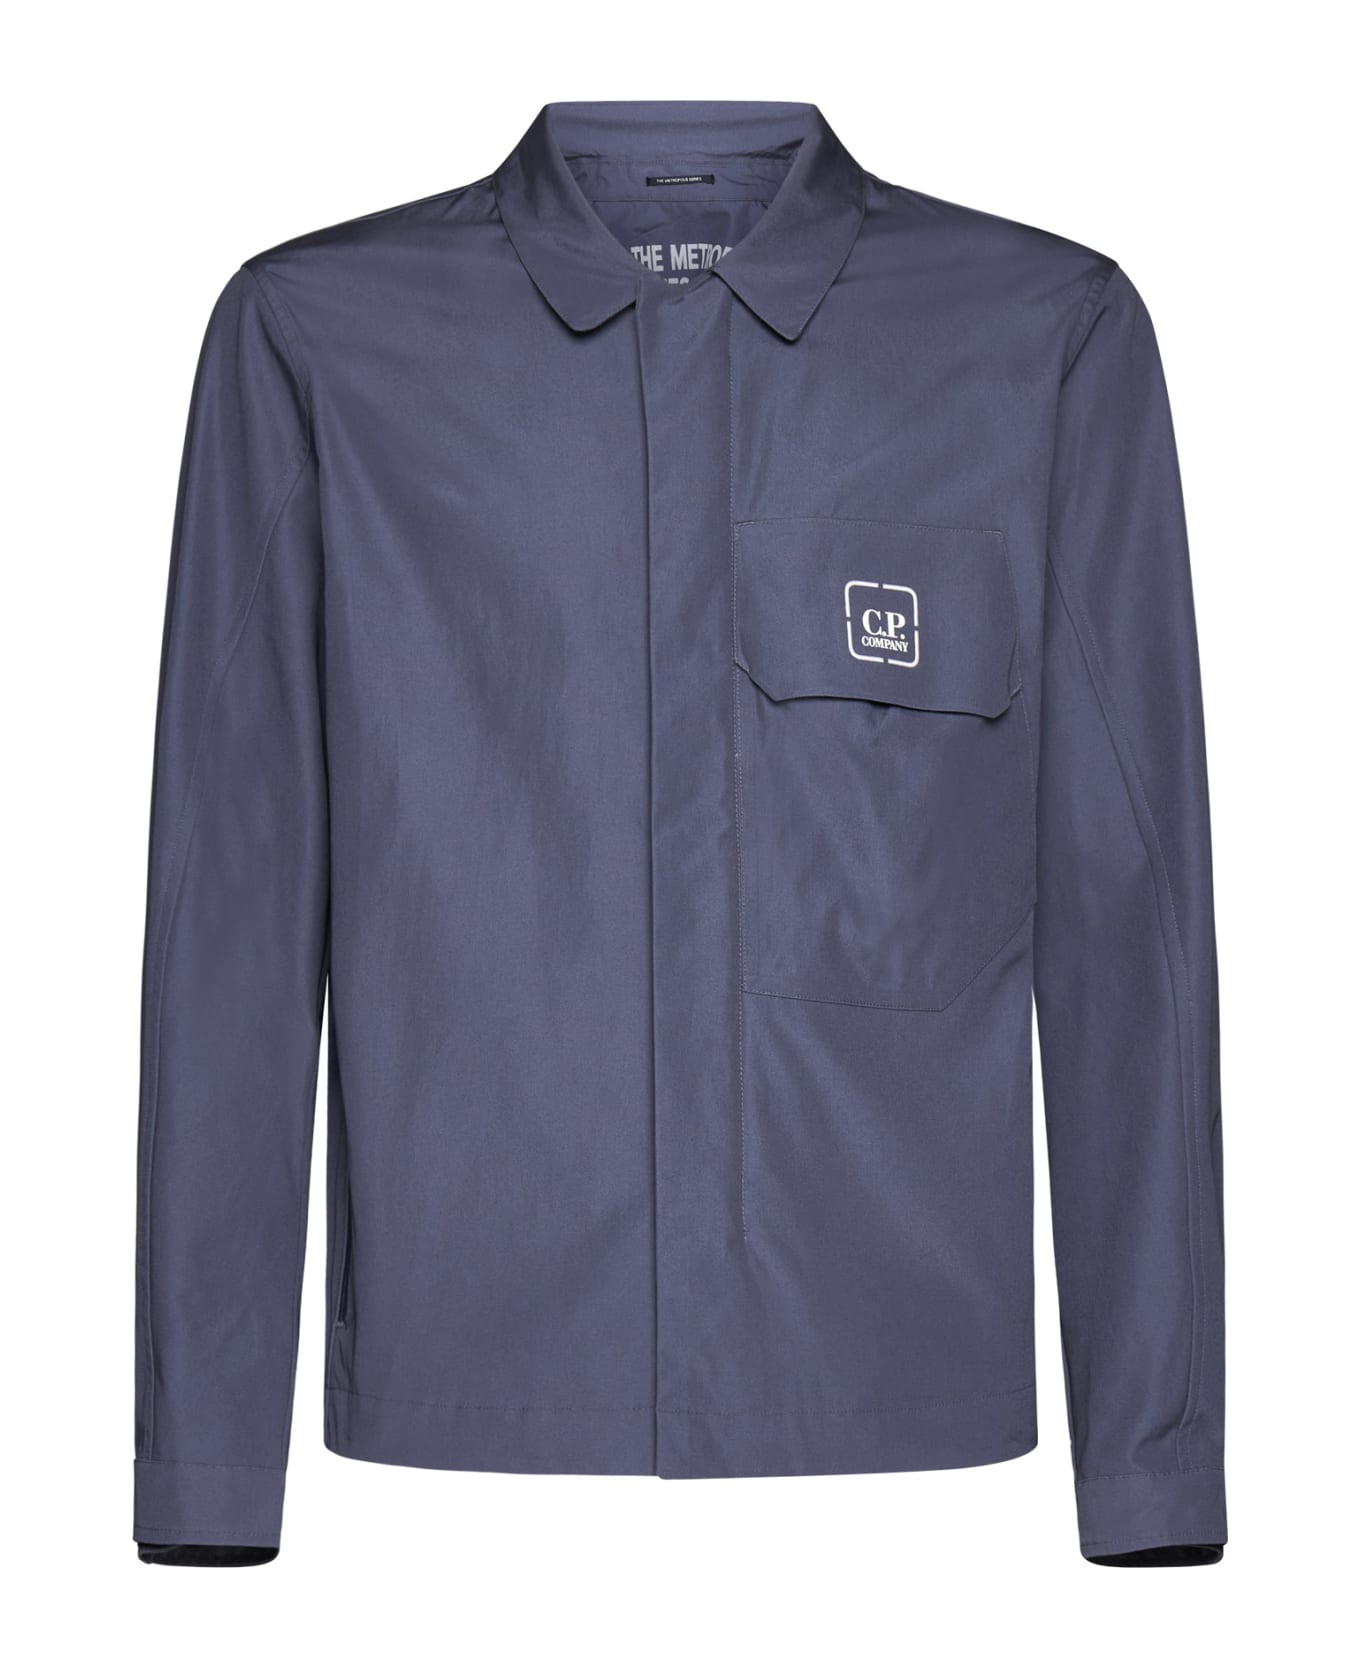 C.P. Company Jacket - Ombre blue